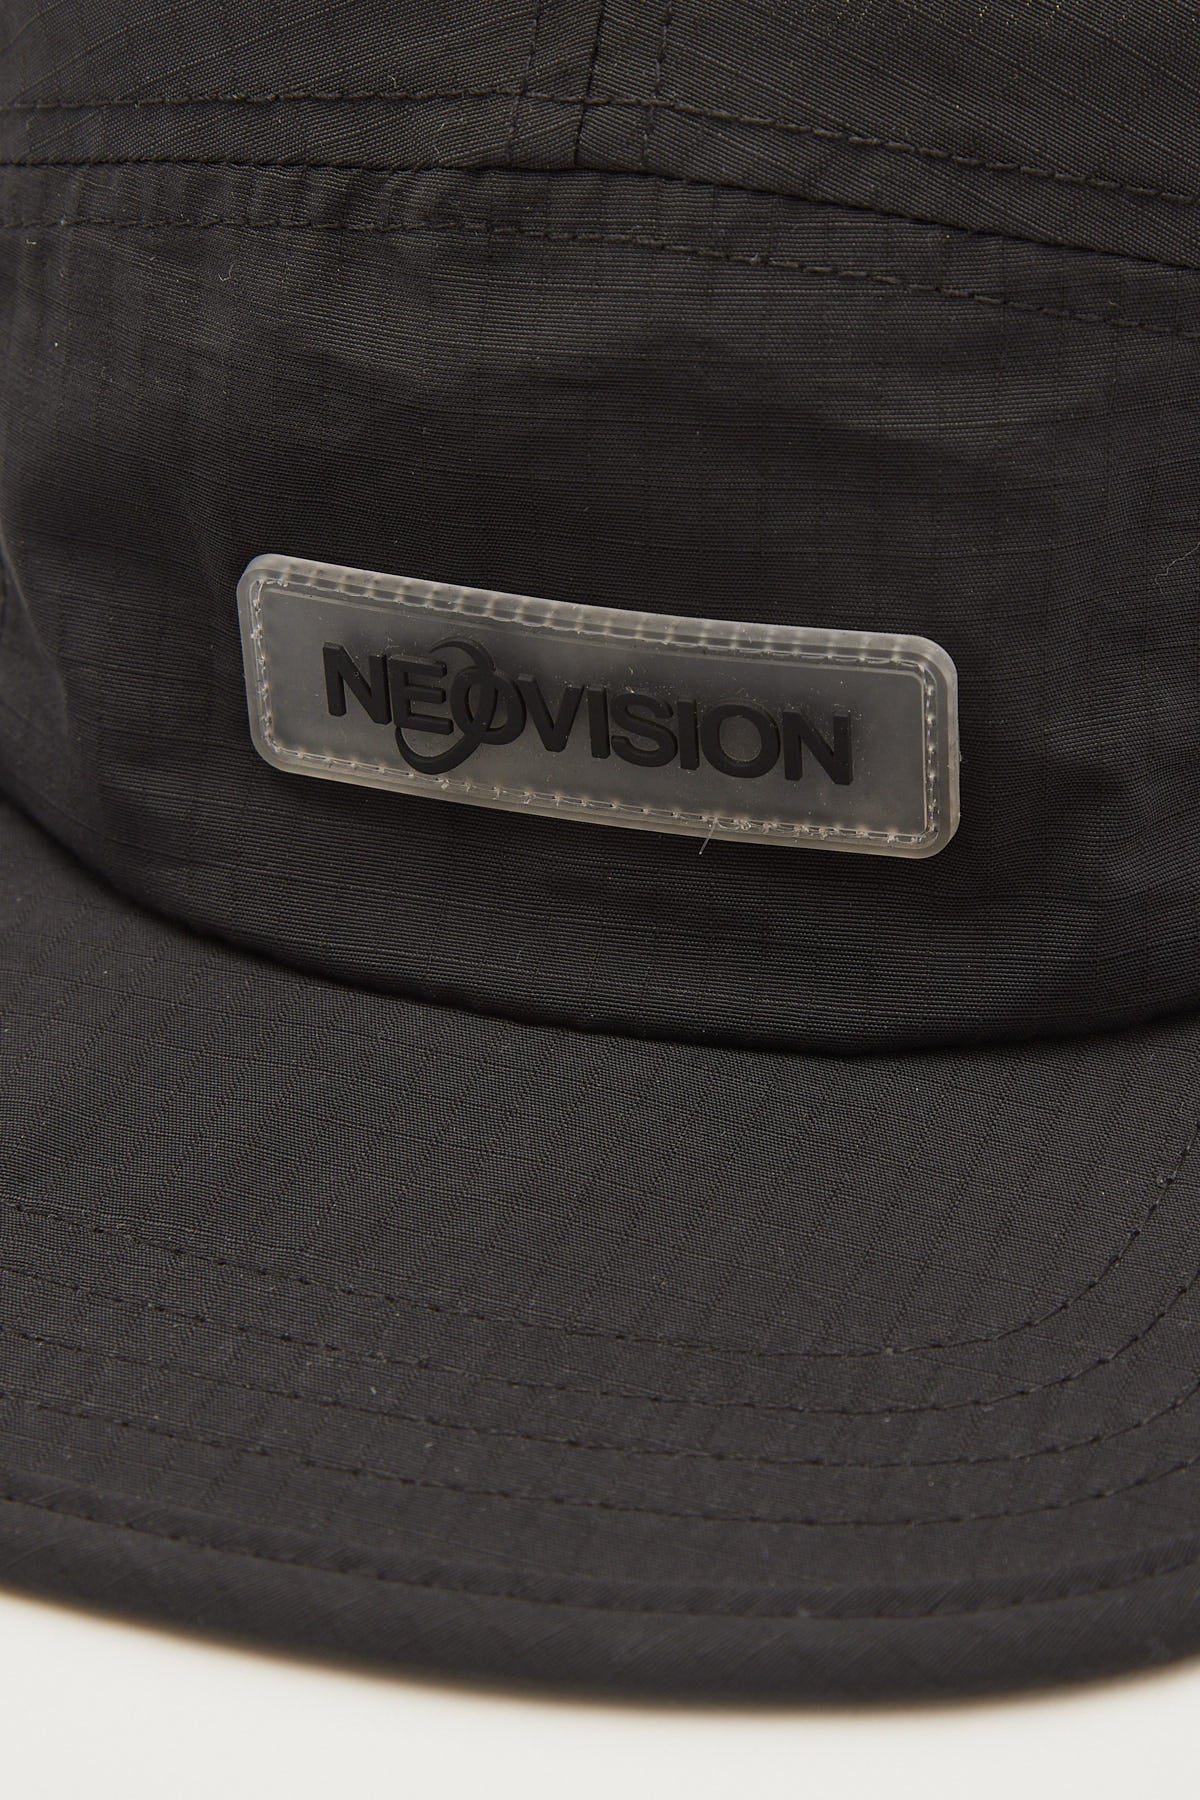 Neovision Sprint Ripstop 5 Panel Cap Black